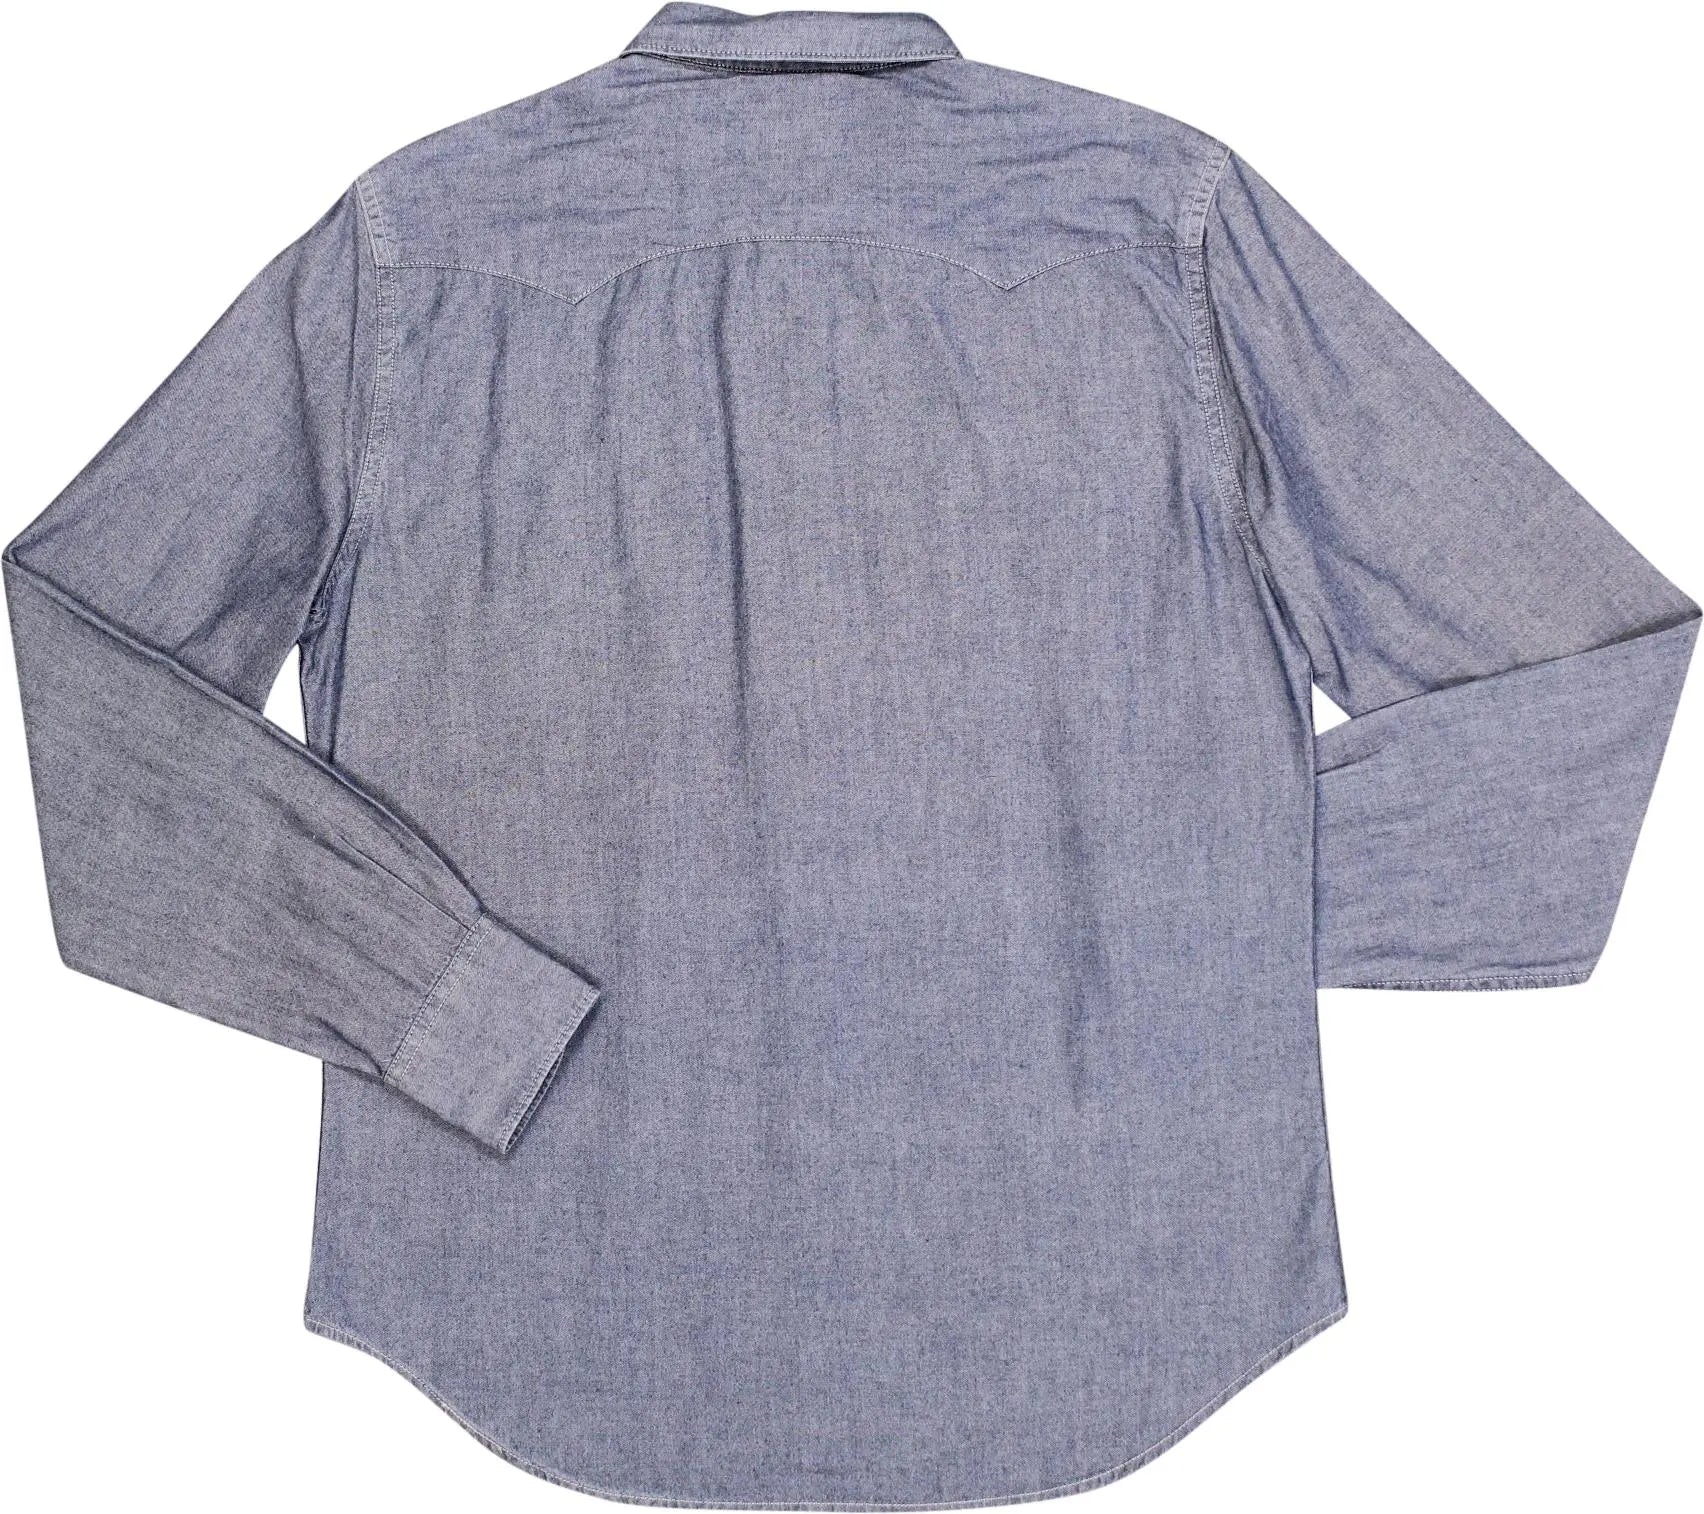 Levi's - Blue Denim Blouse by Levi's- ThriftTale.com - Vintage and second handclothing